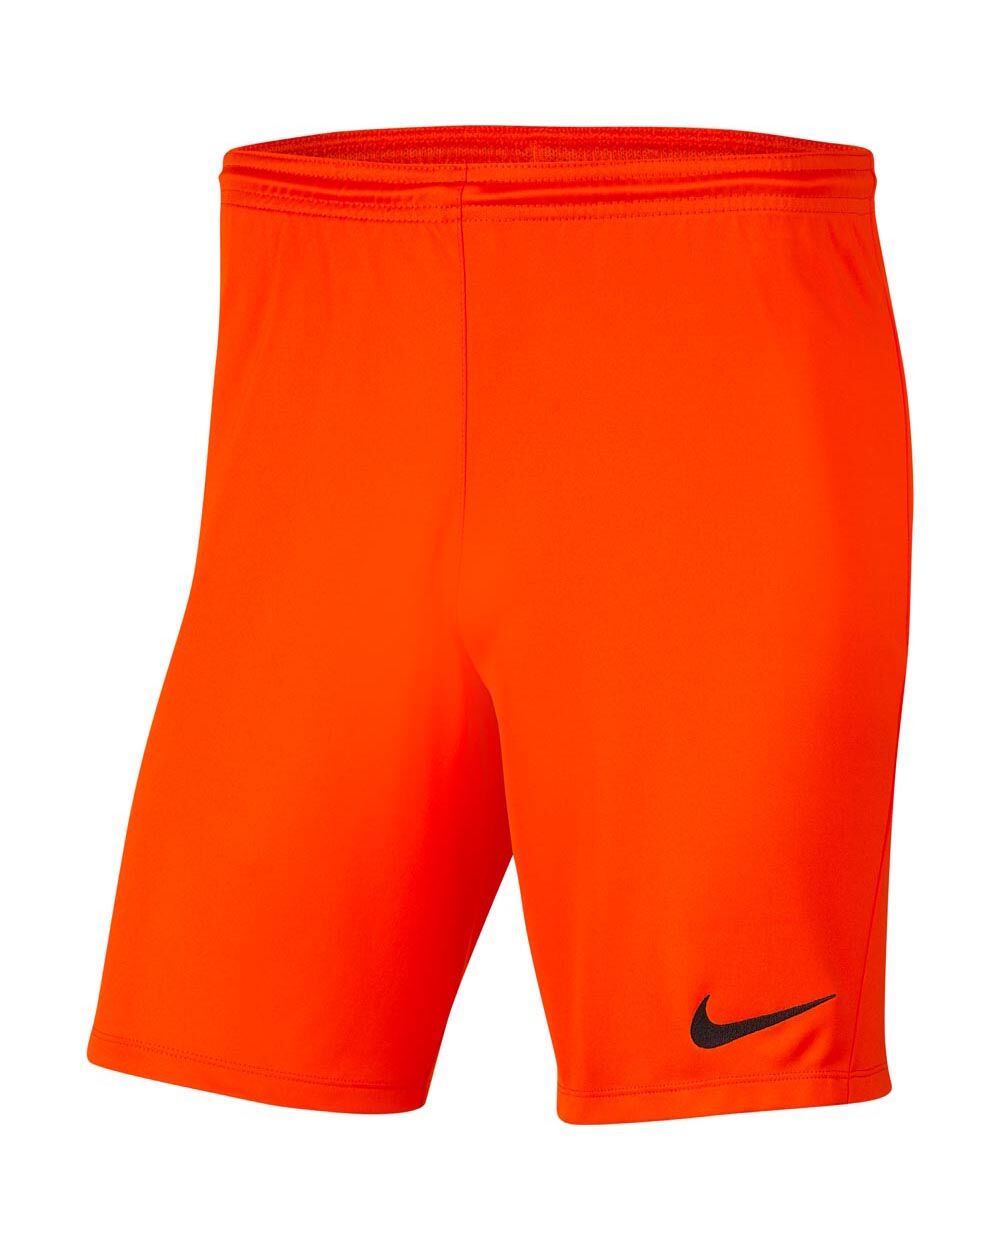 Pantalón corto Nike Park III Naranja Hombre - BV6855-819